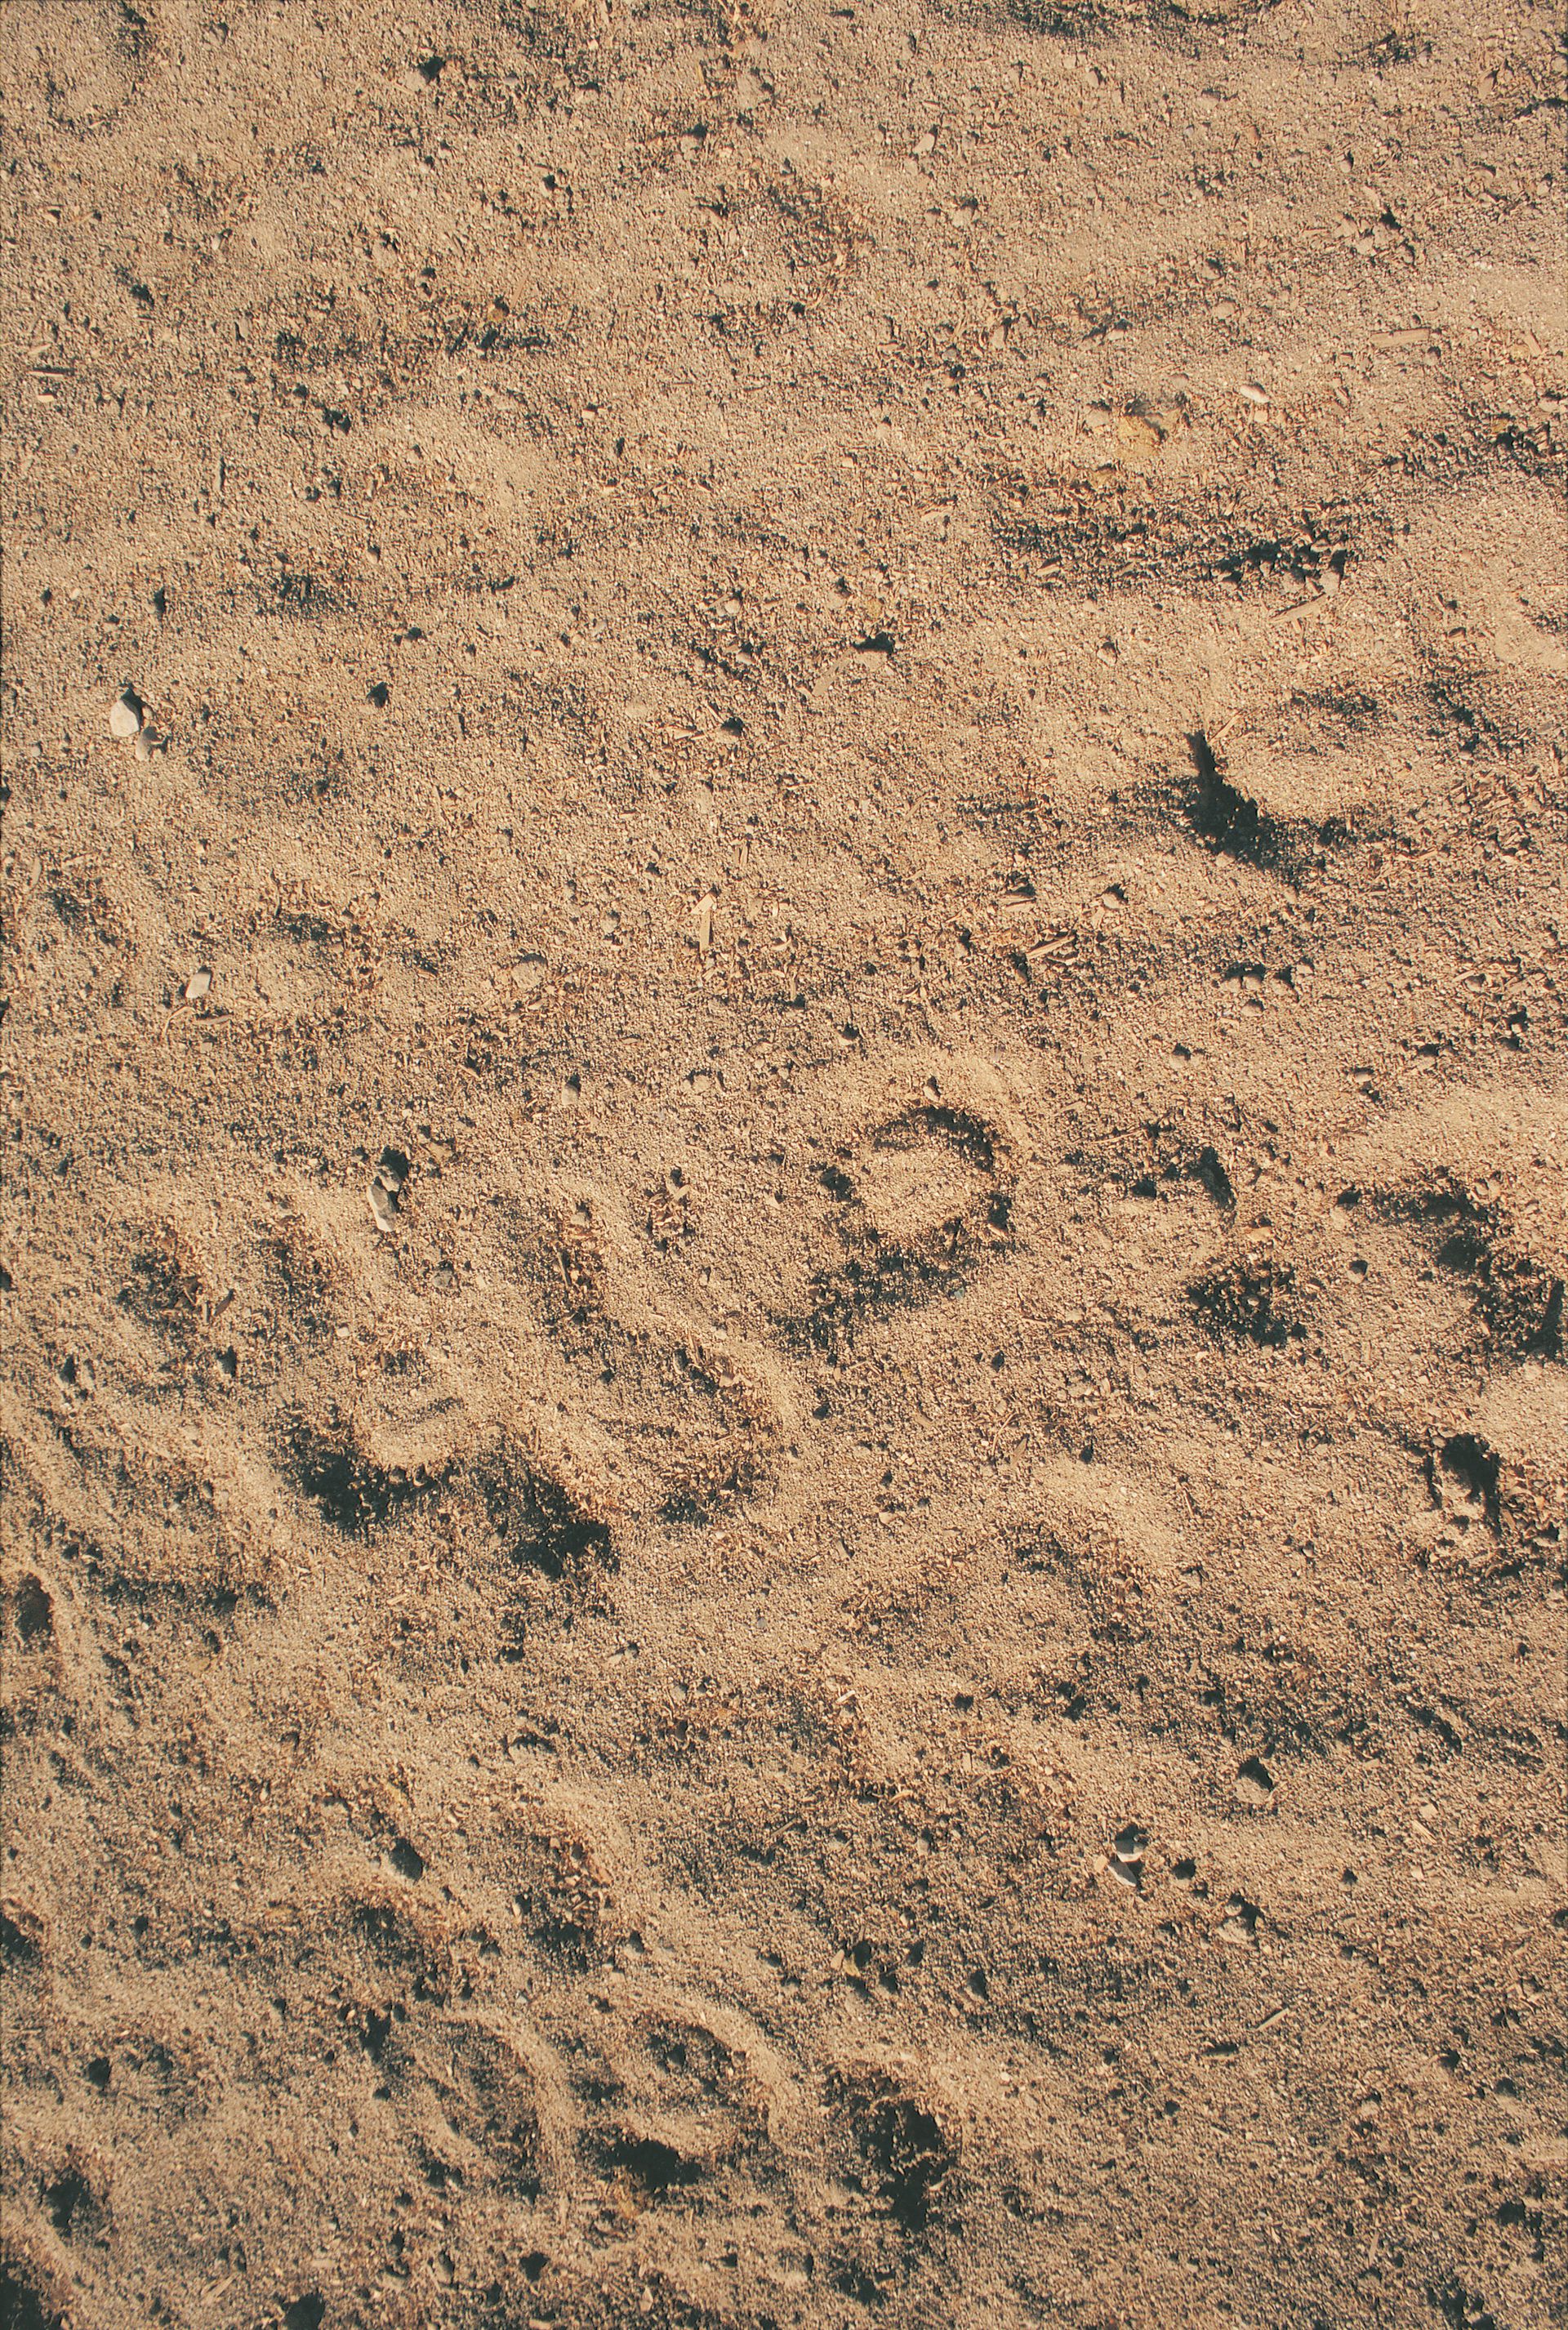 Tan sand covered in horseshoe prints.